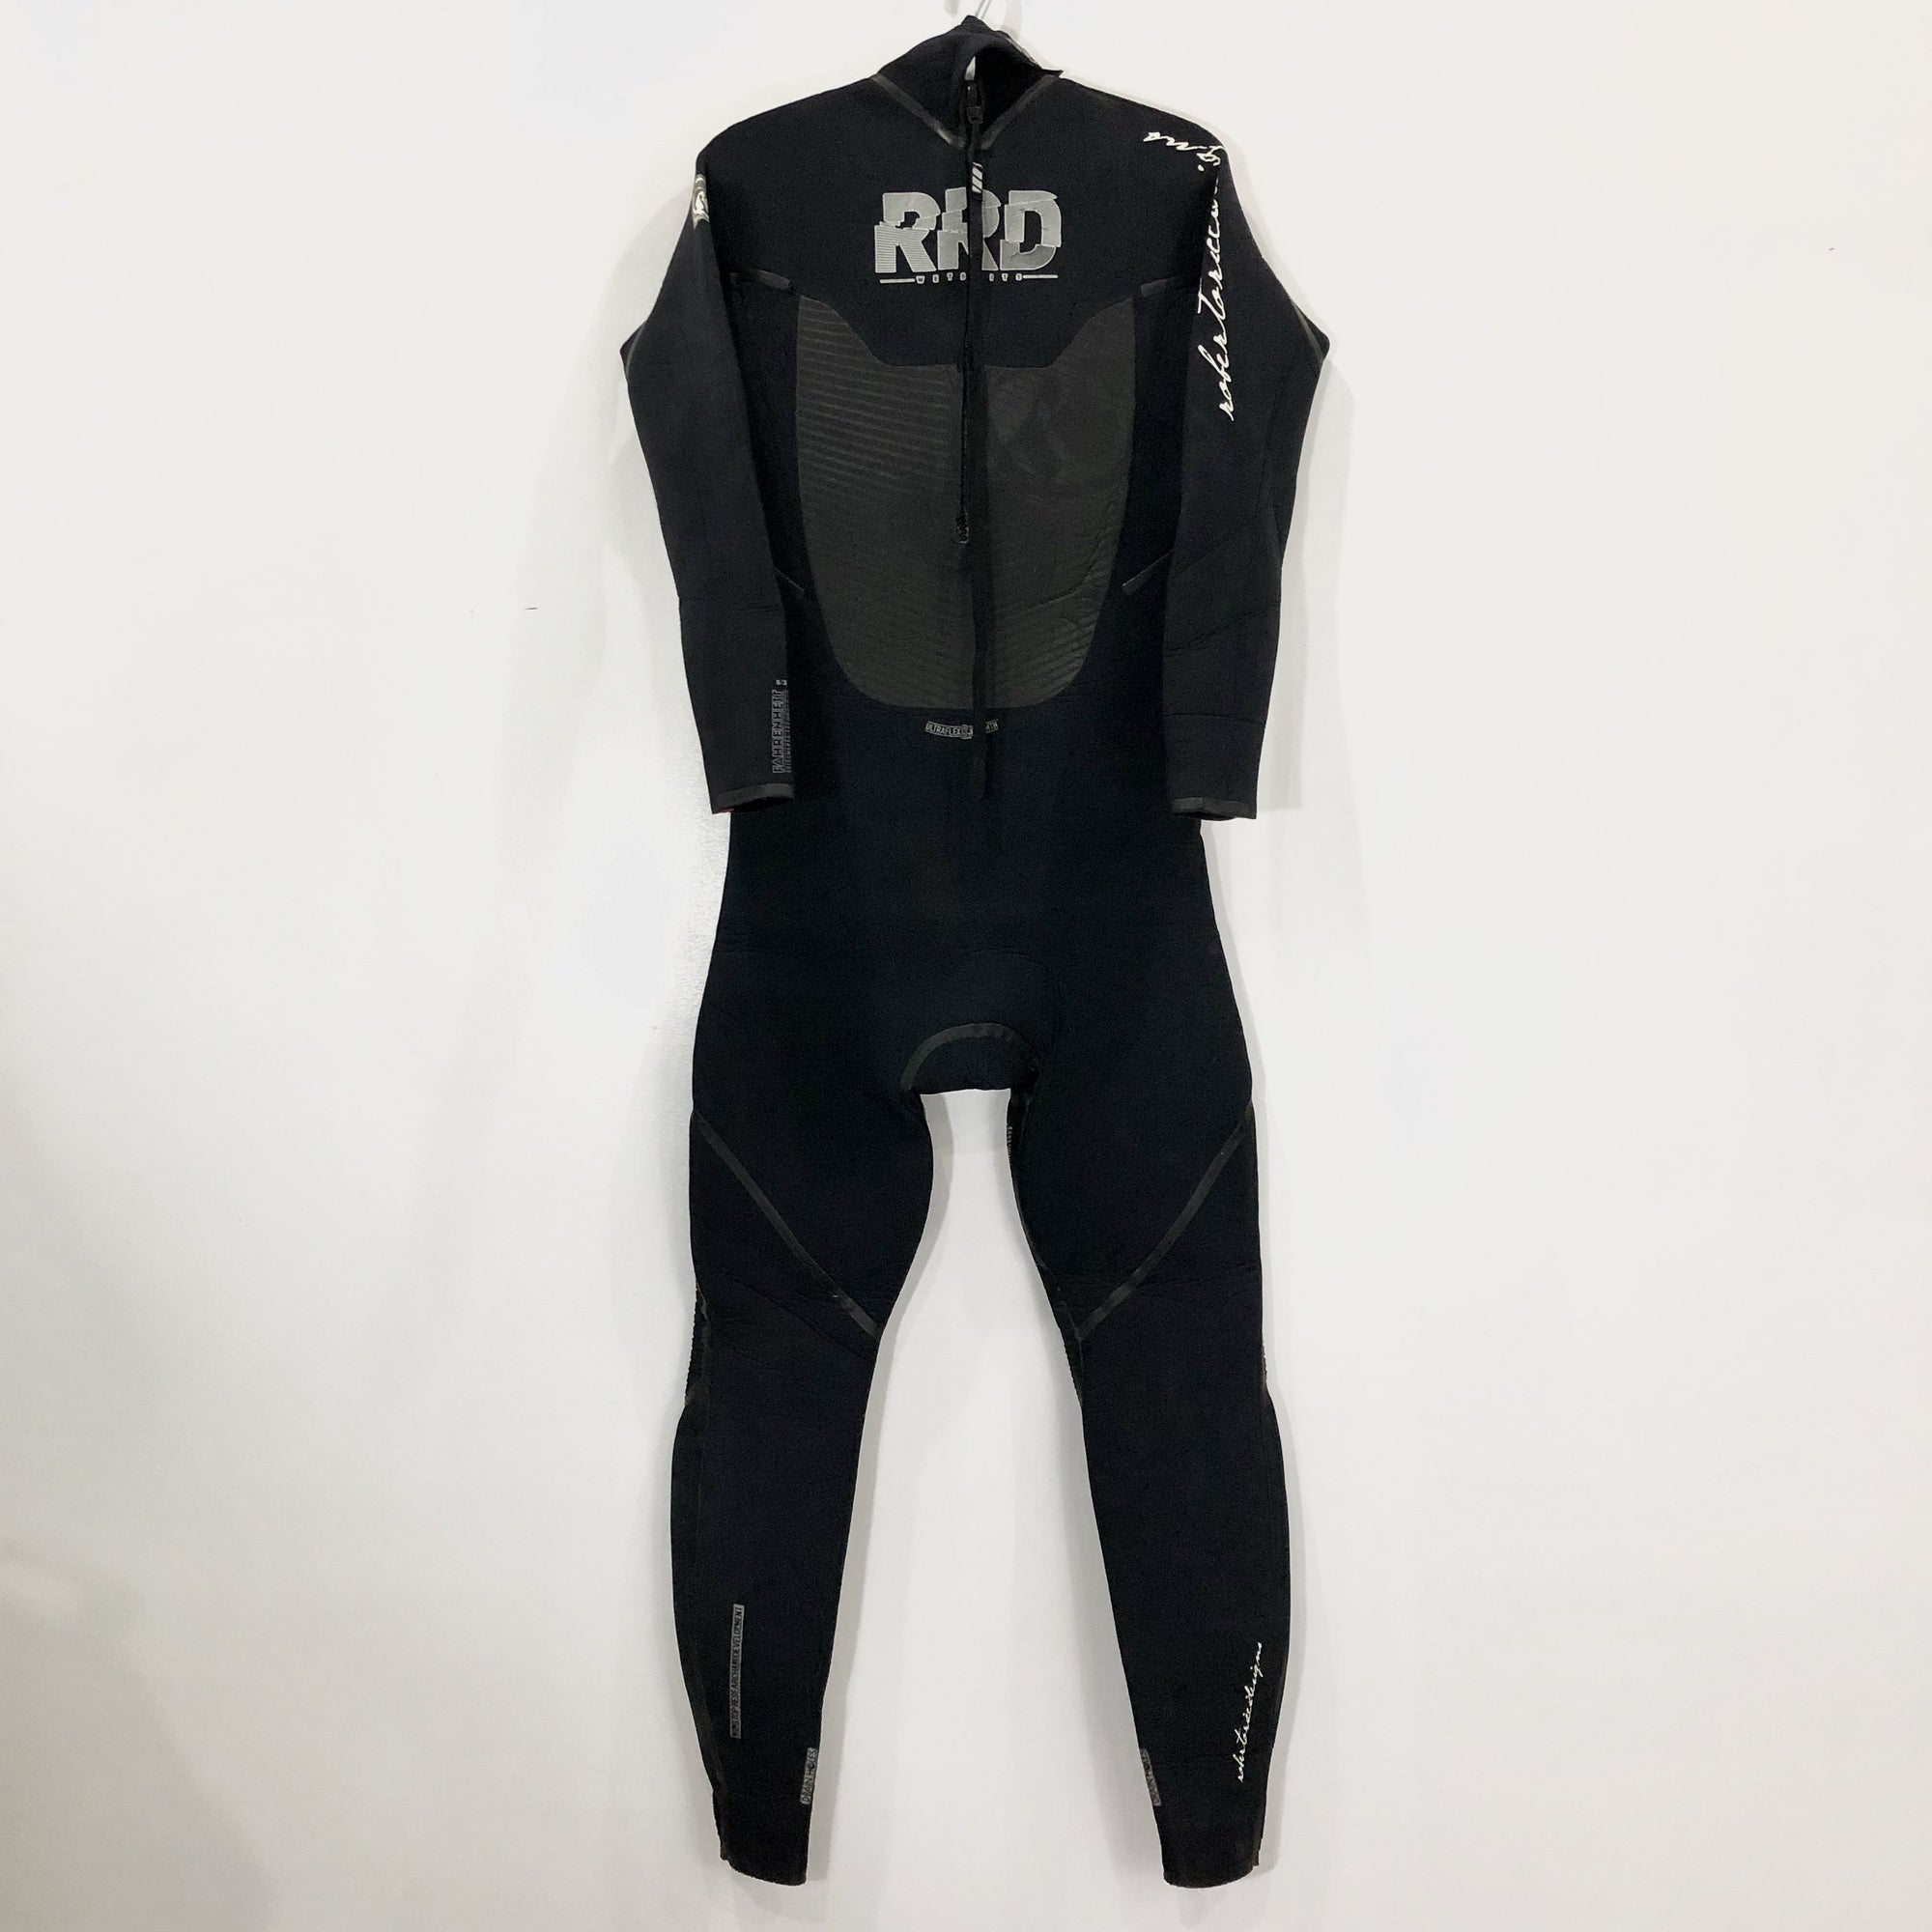 USED RRD Fahrenheit Full Suit 2017 5/3 L front